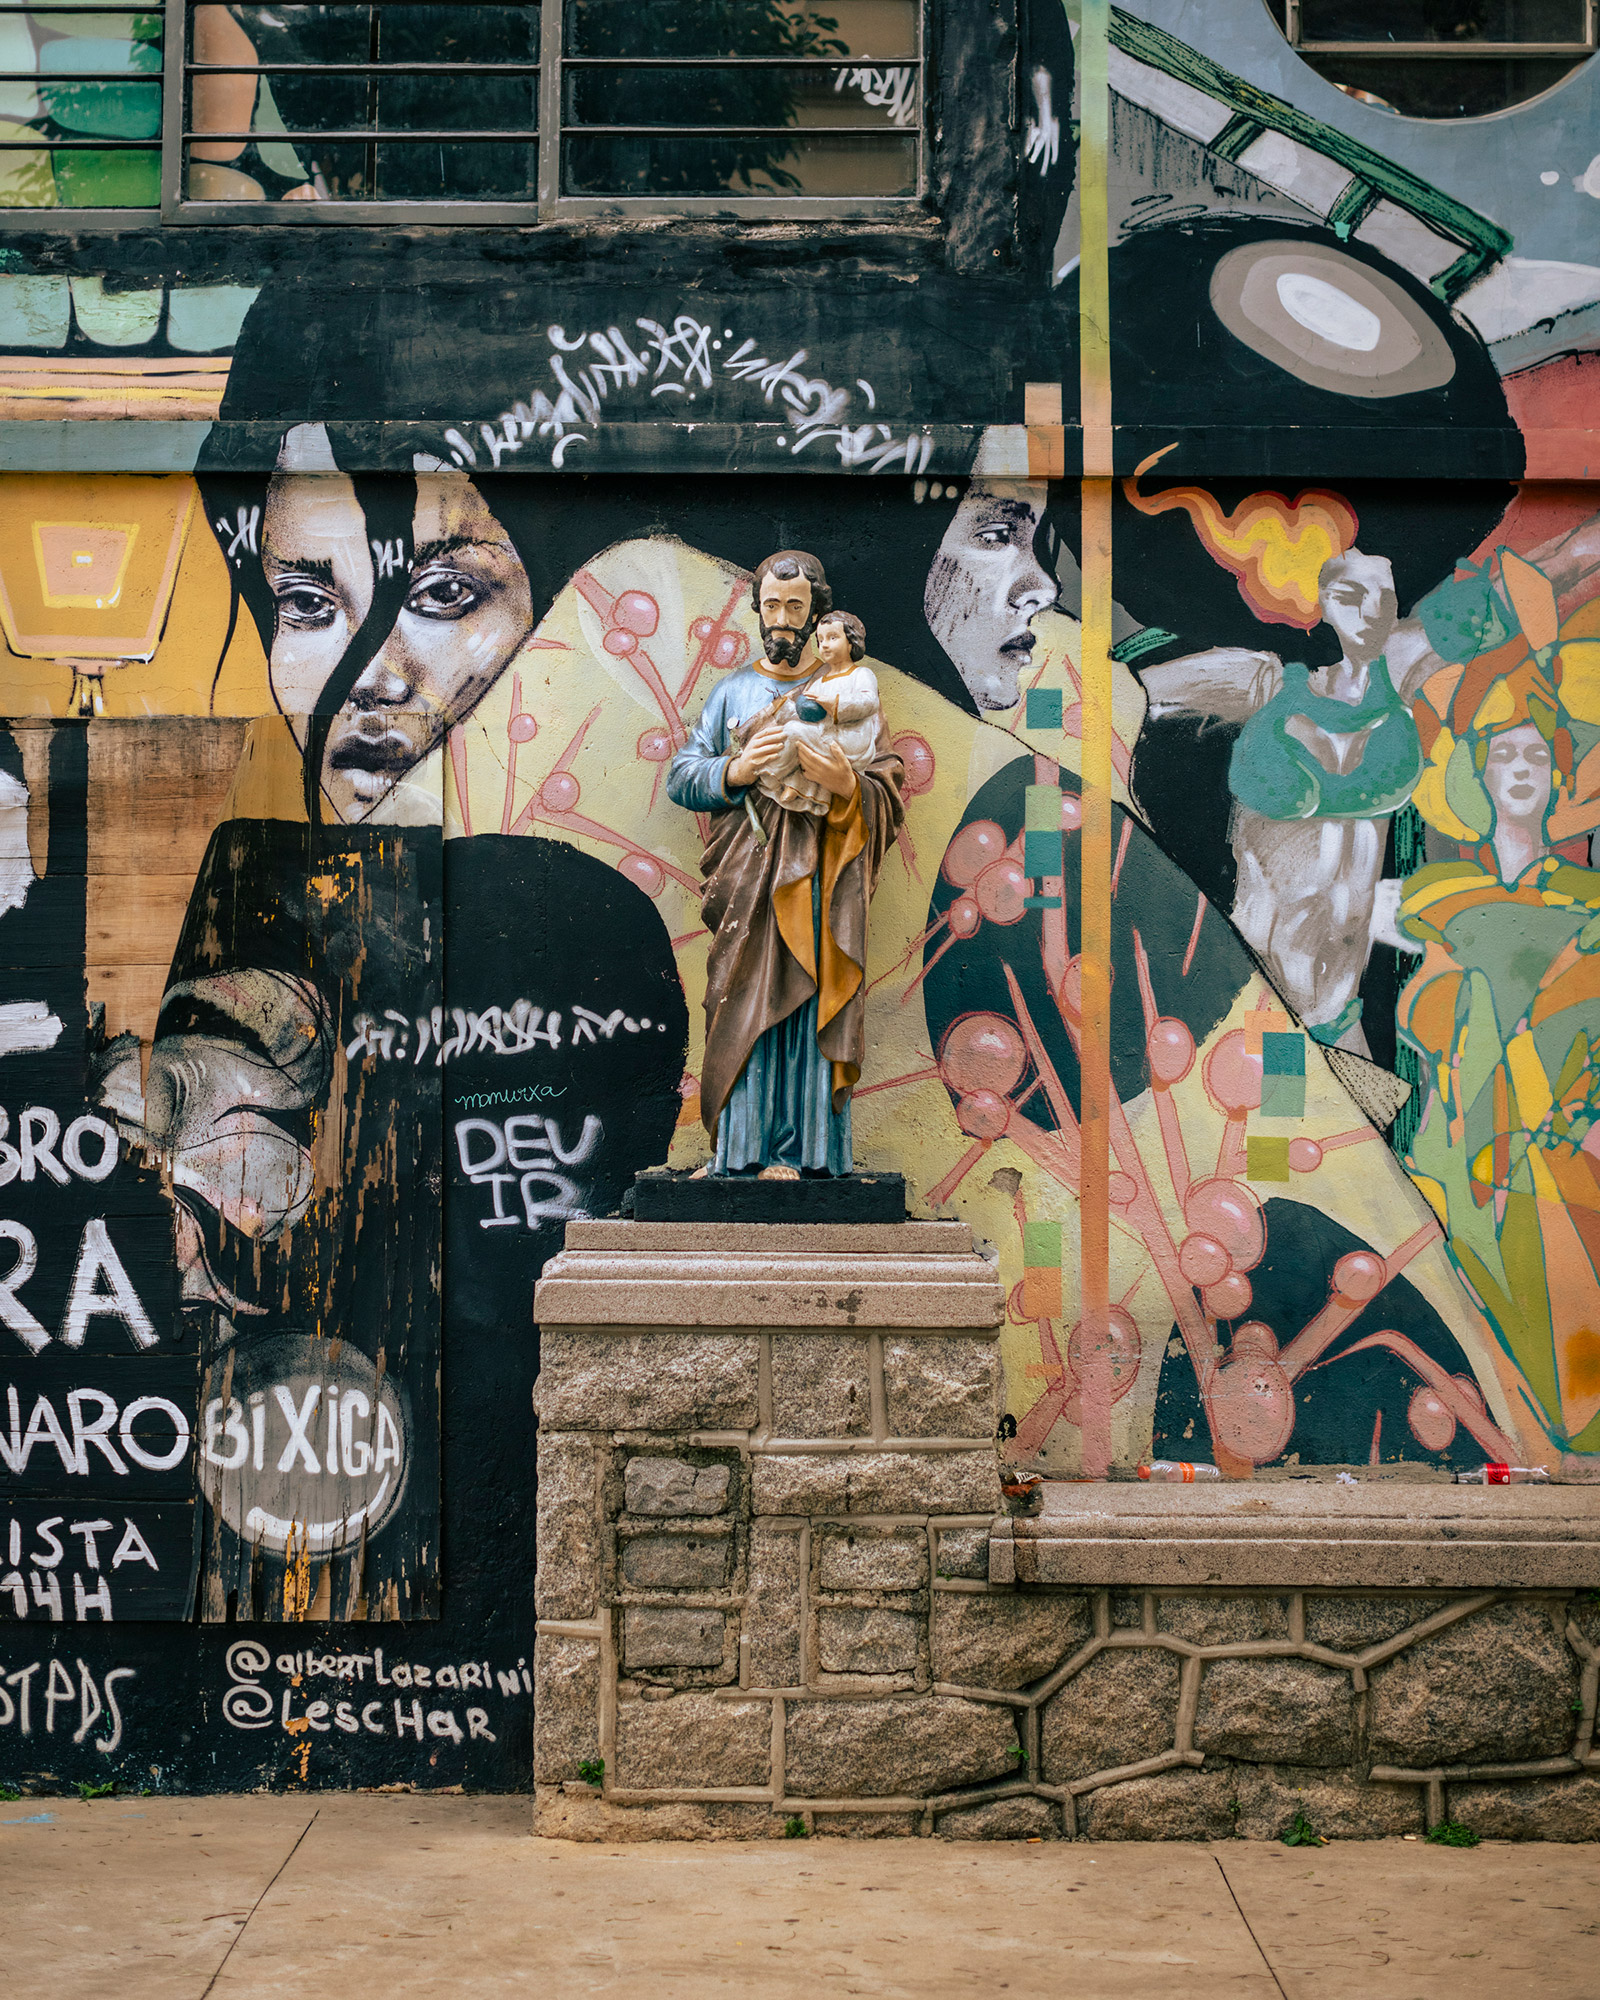 Saint Judas and the graffiti